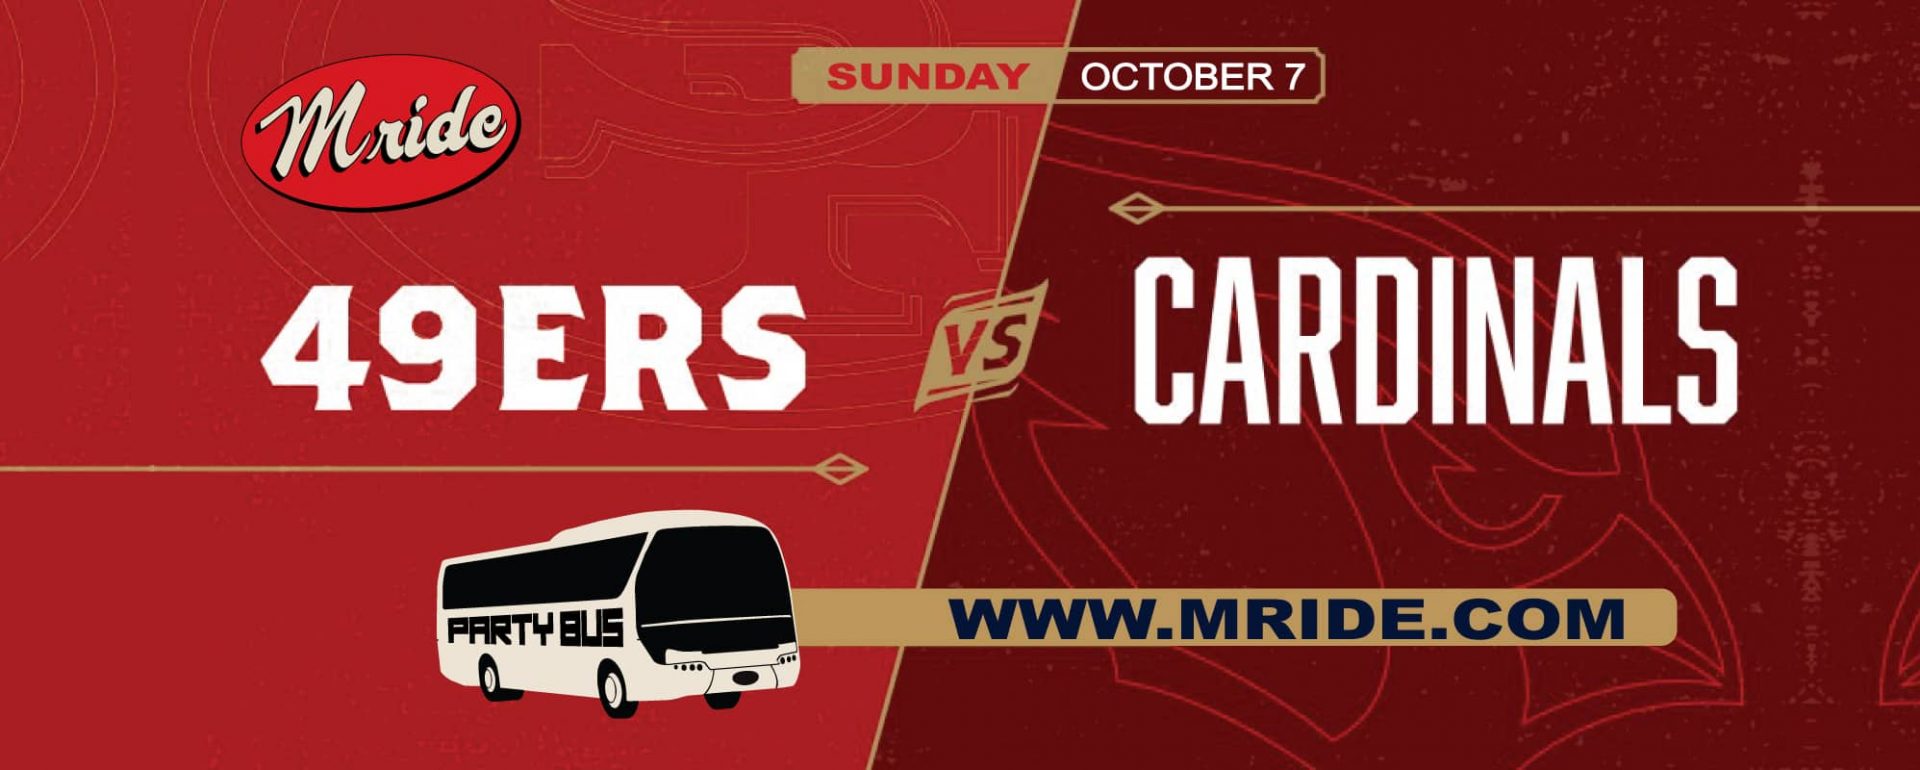 49ers vs. Cardinals Shuttle Bus